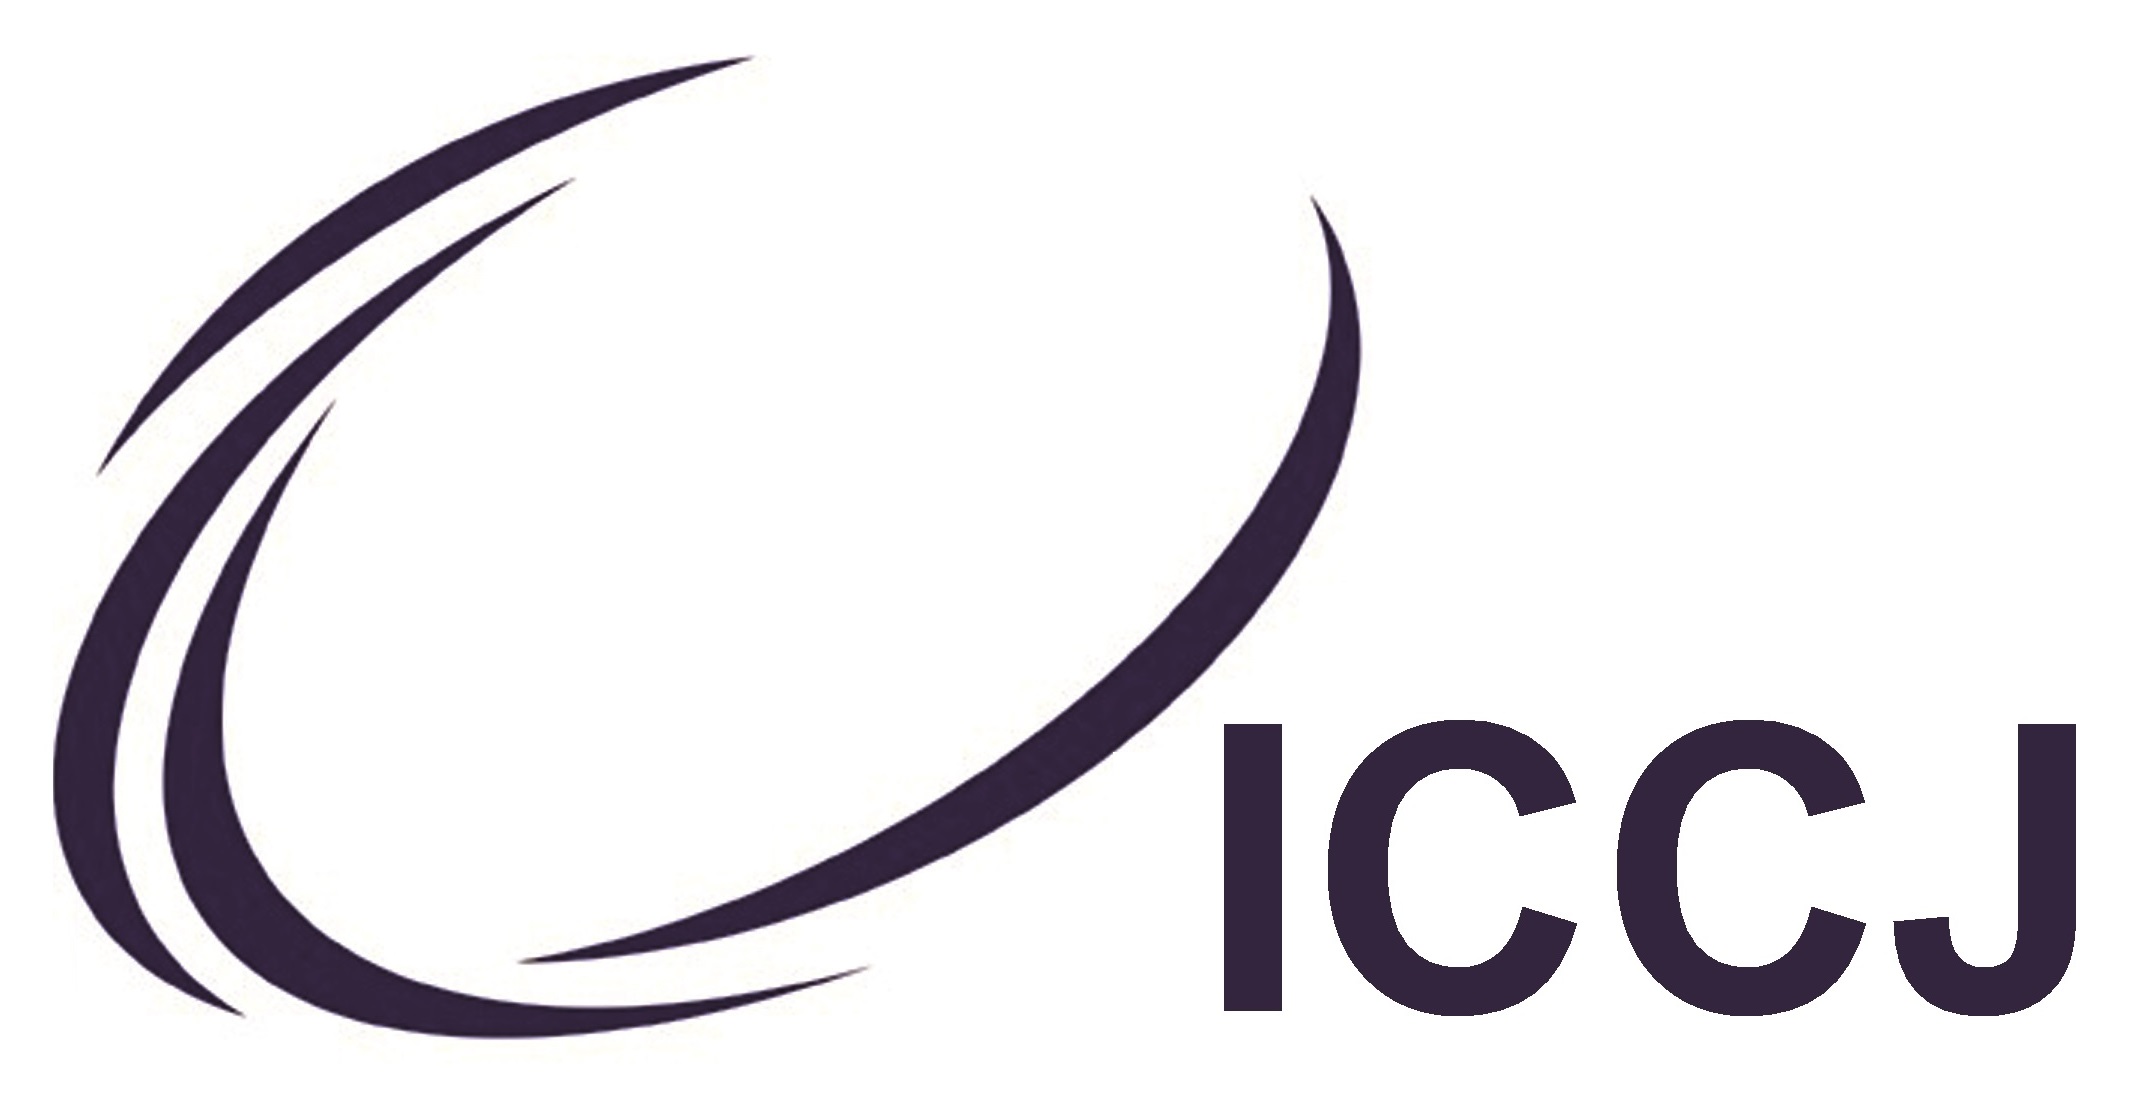 ICCJ logo w initials